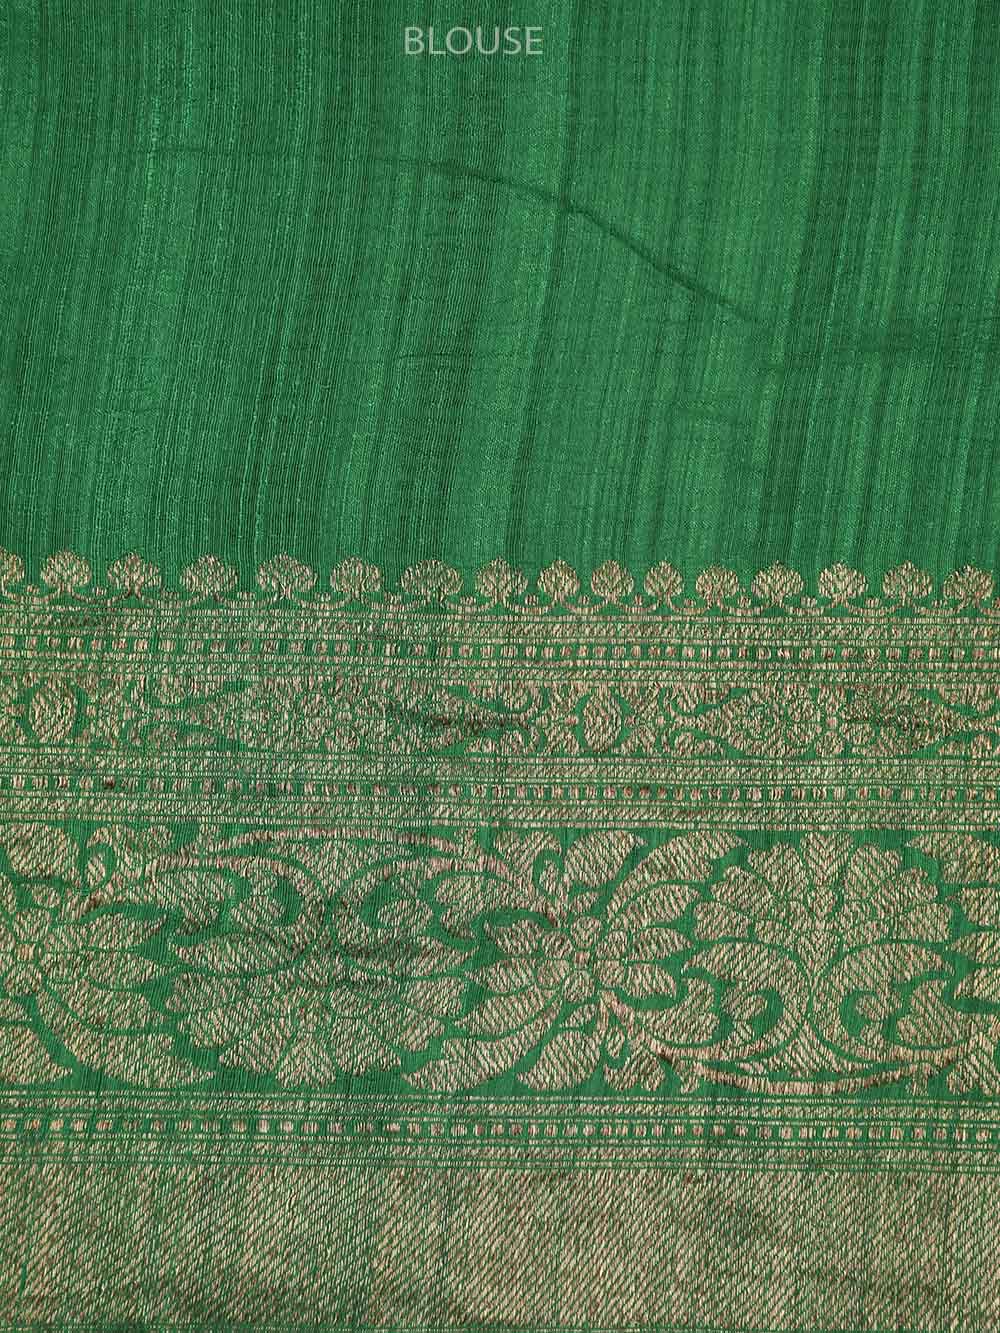 Red Boota Dupion Silk Handloom Banarasi Saree - Sacred Weaves